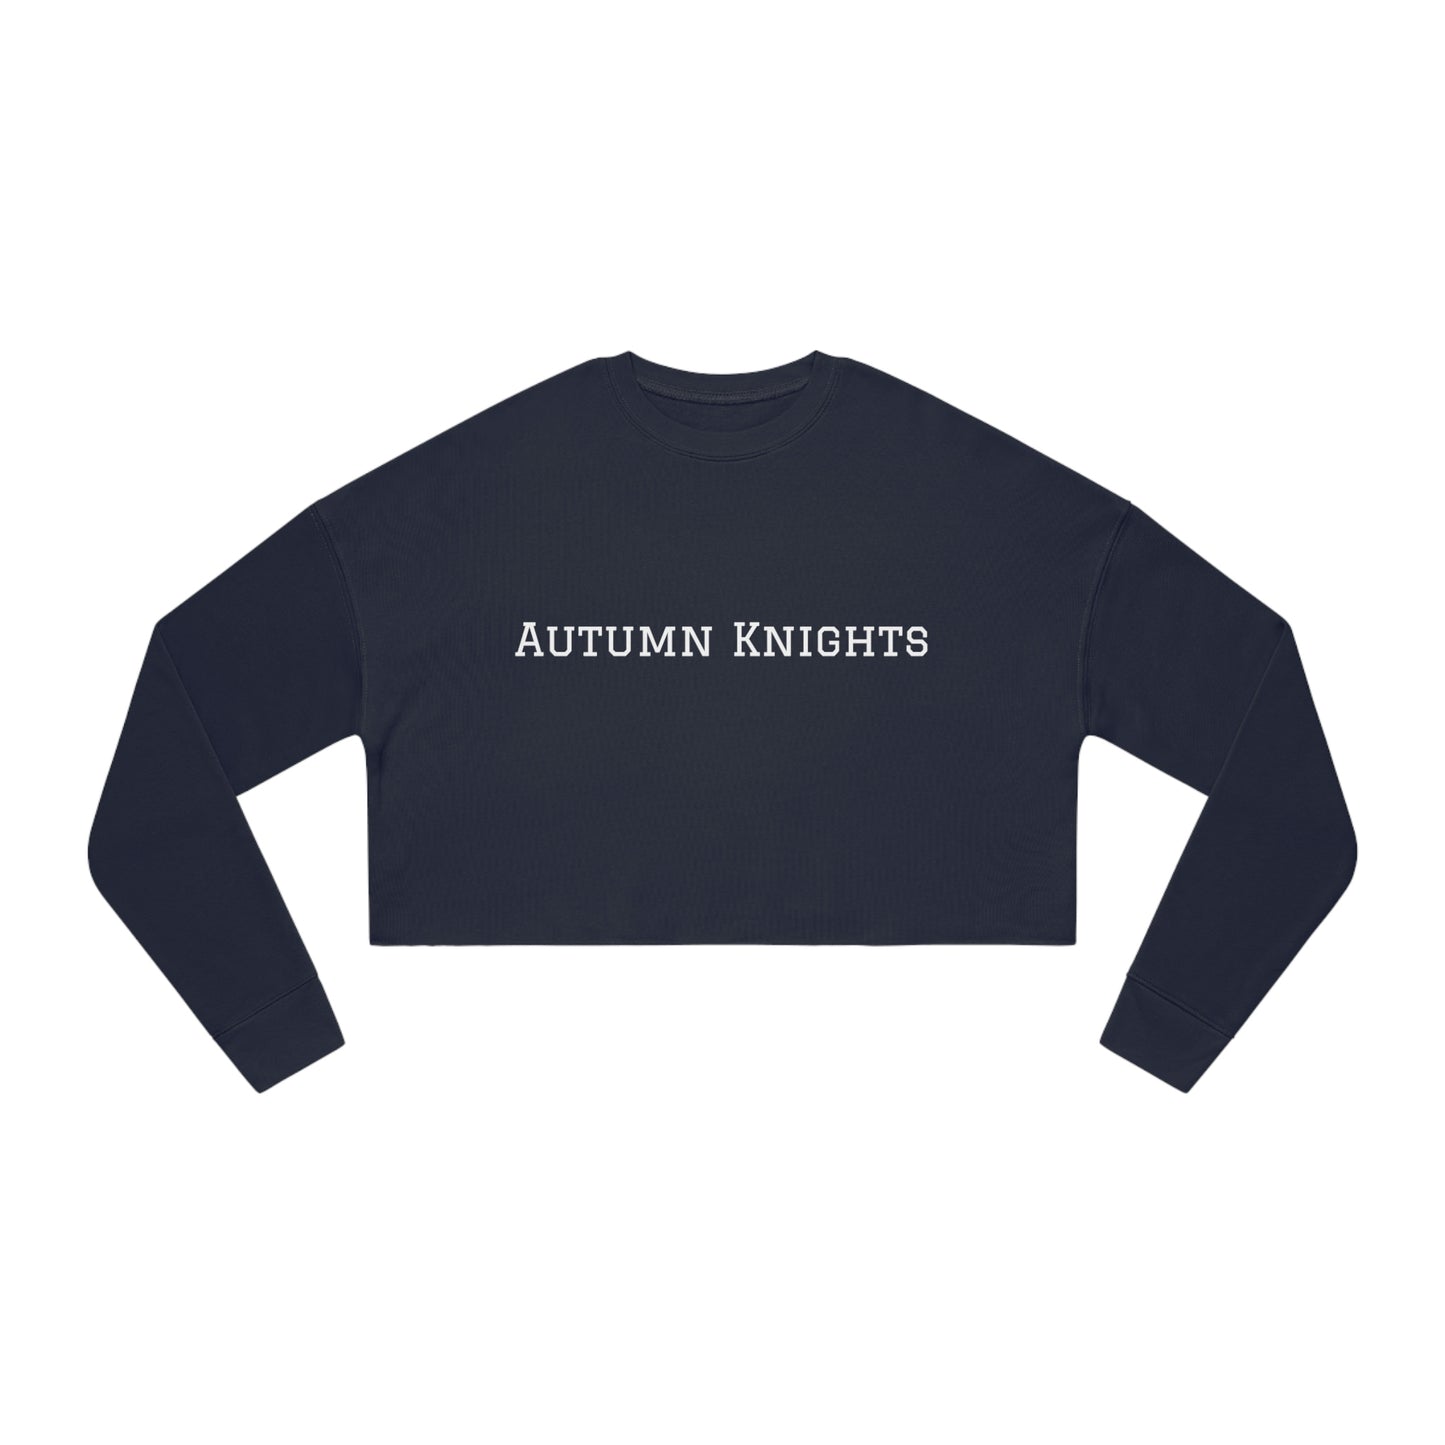 Autumn Knights - Women's Cropped Sweatshirt